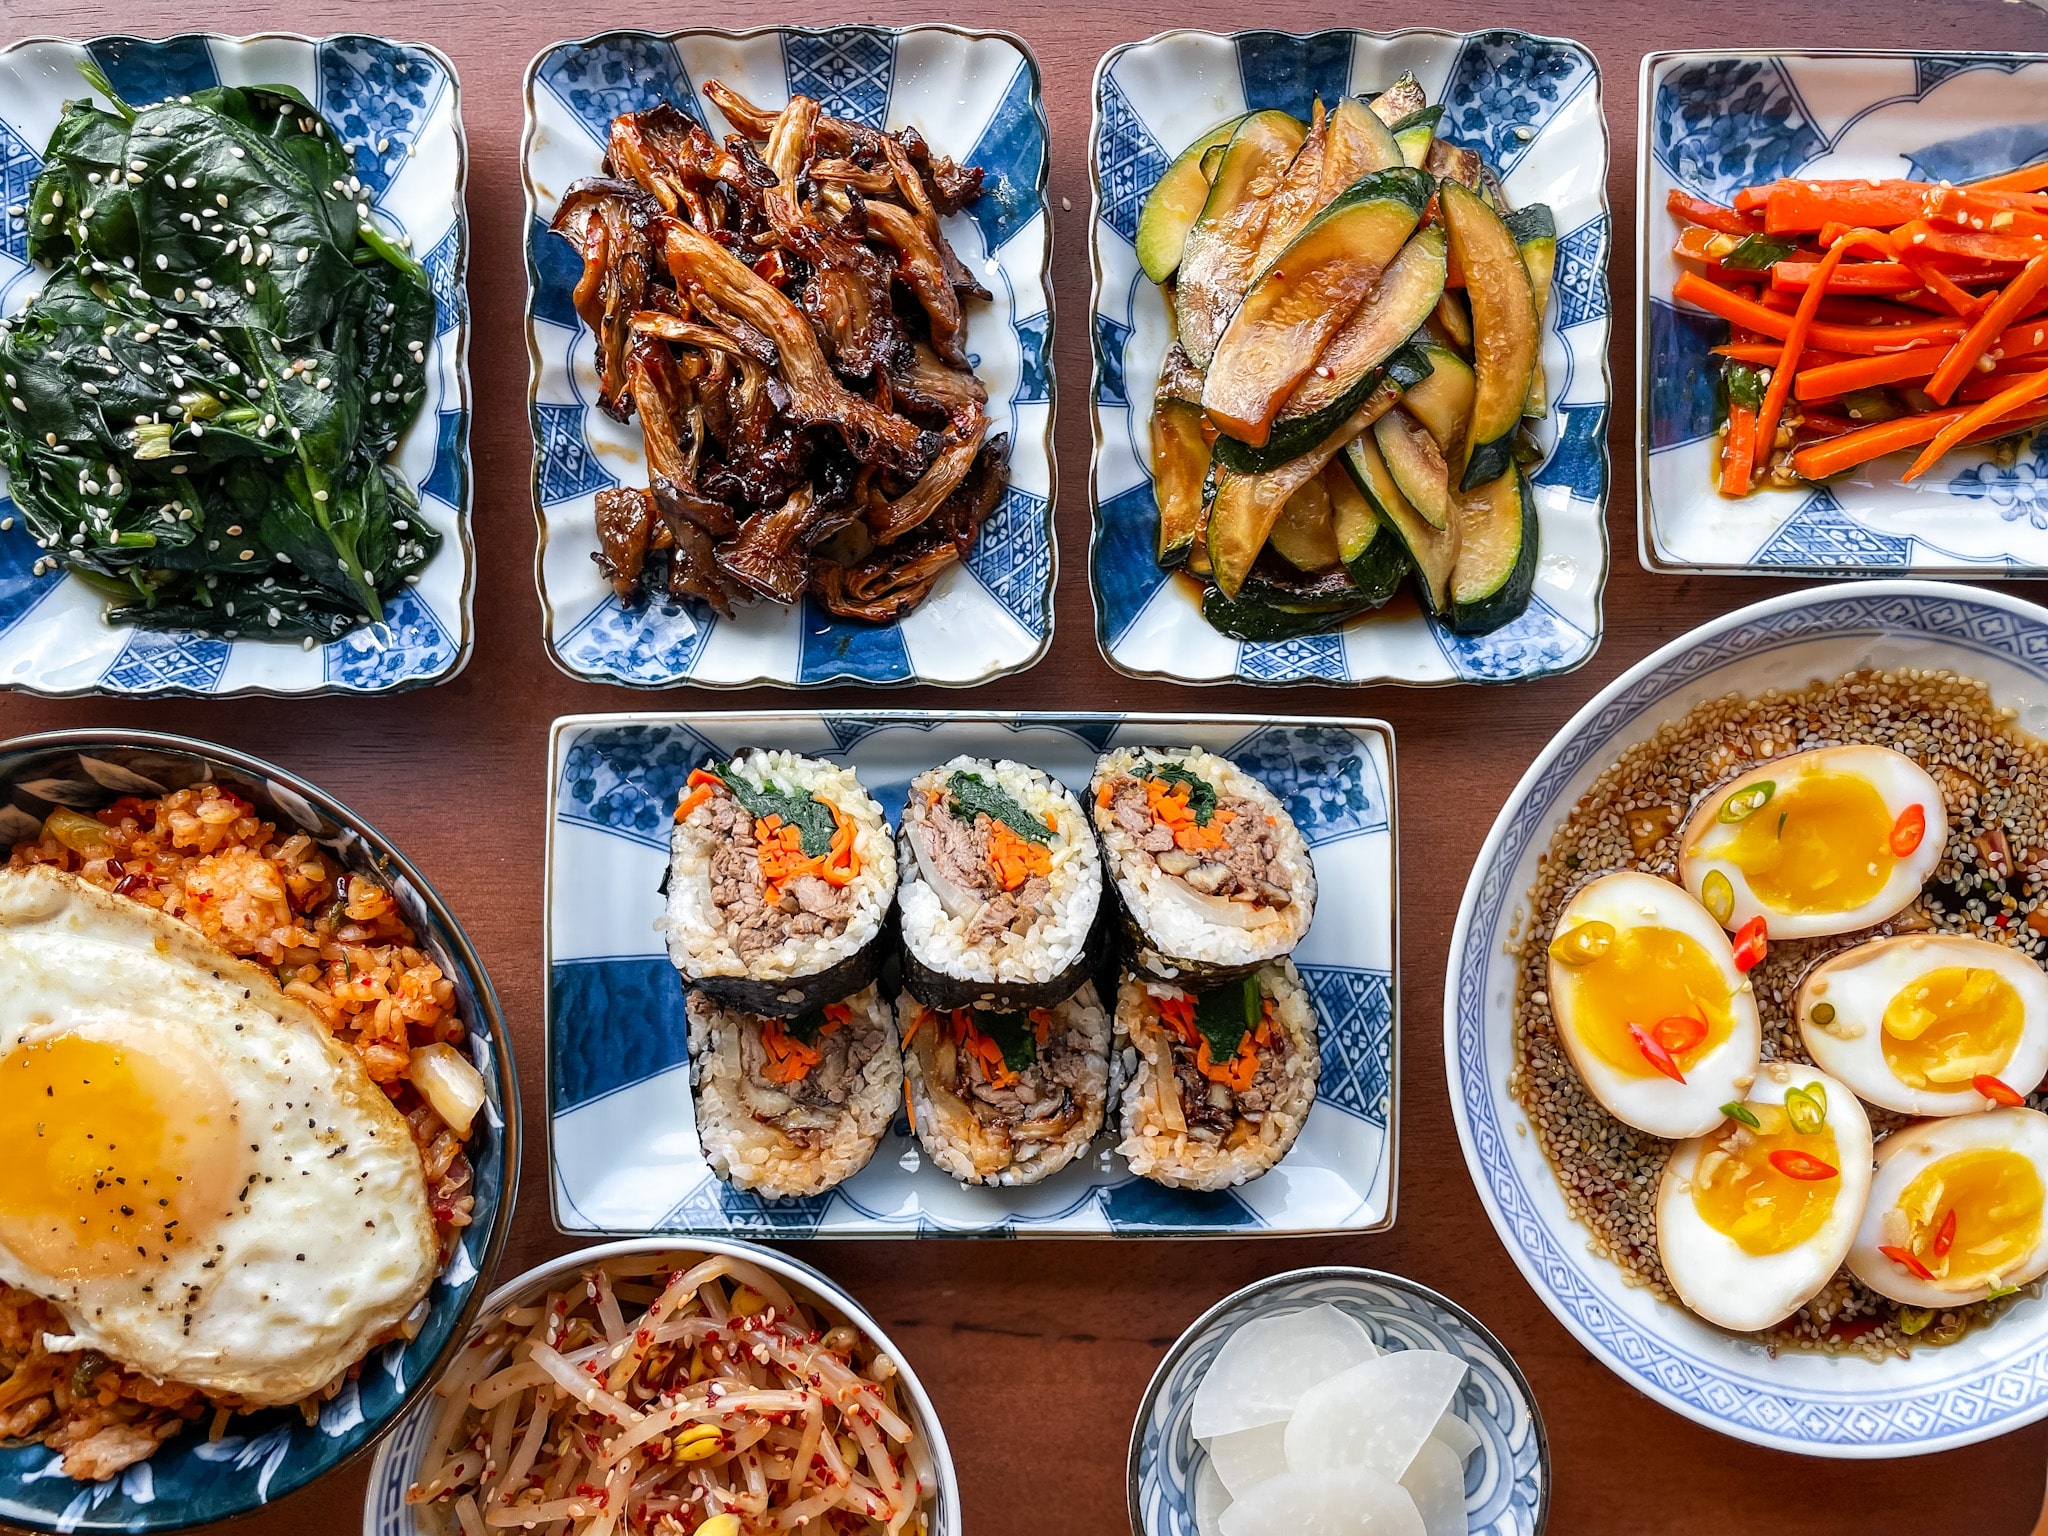 Korean cooking class